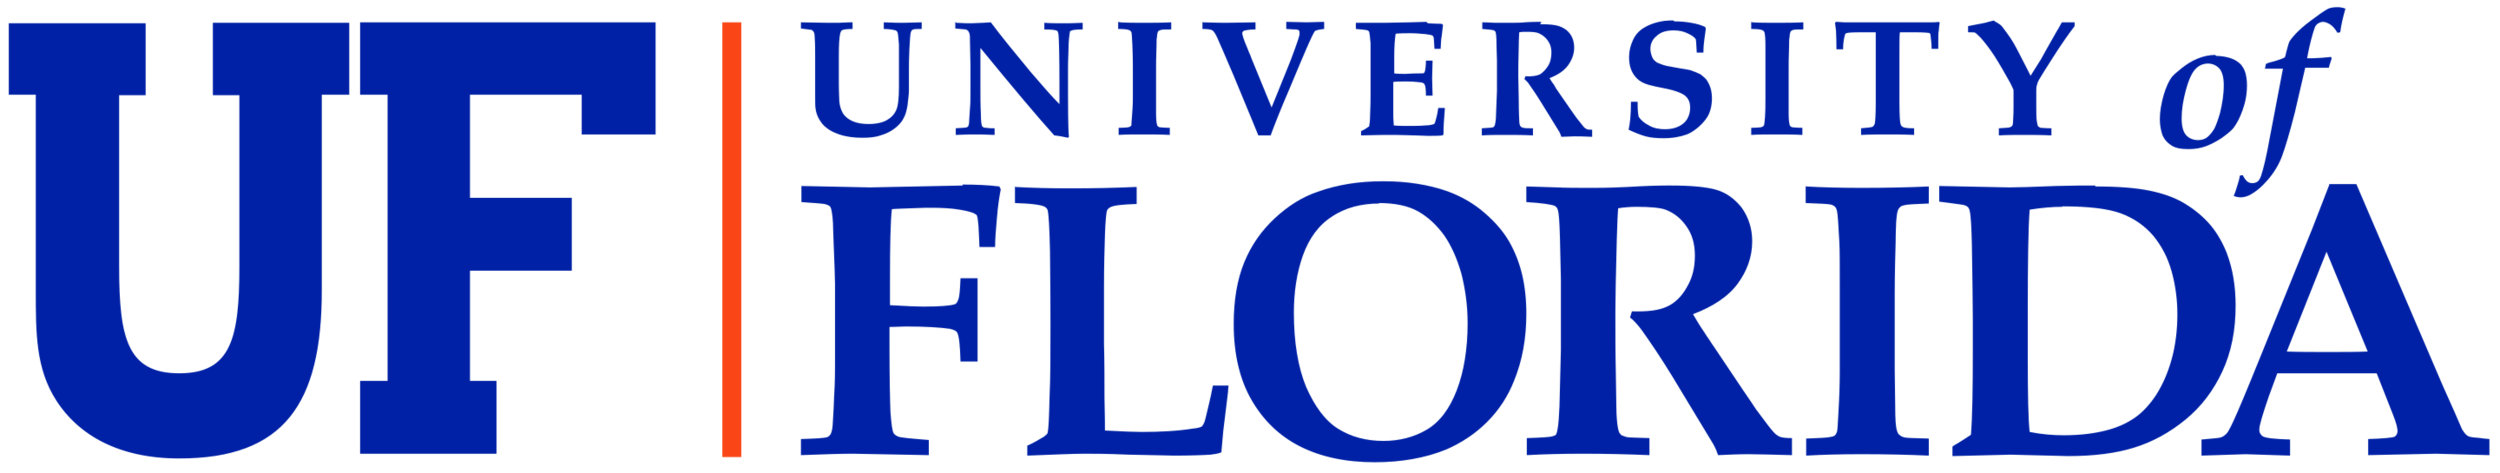 University of Florida Logo.png